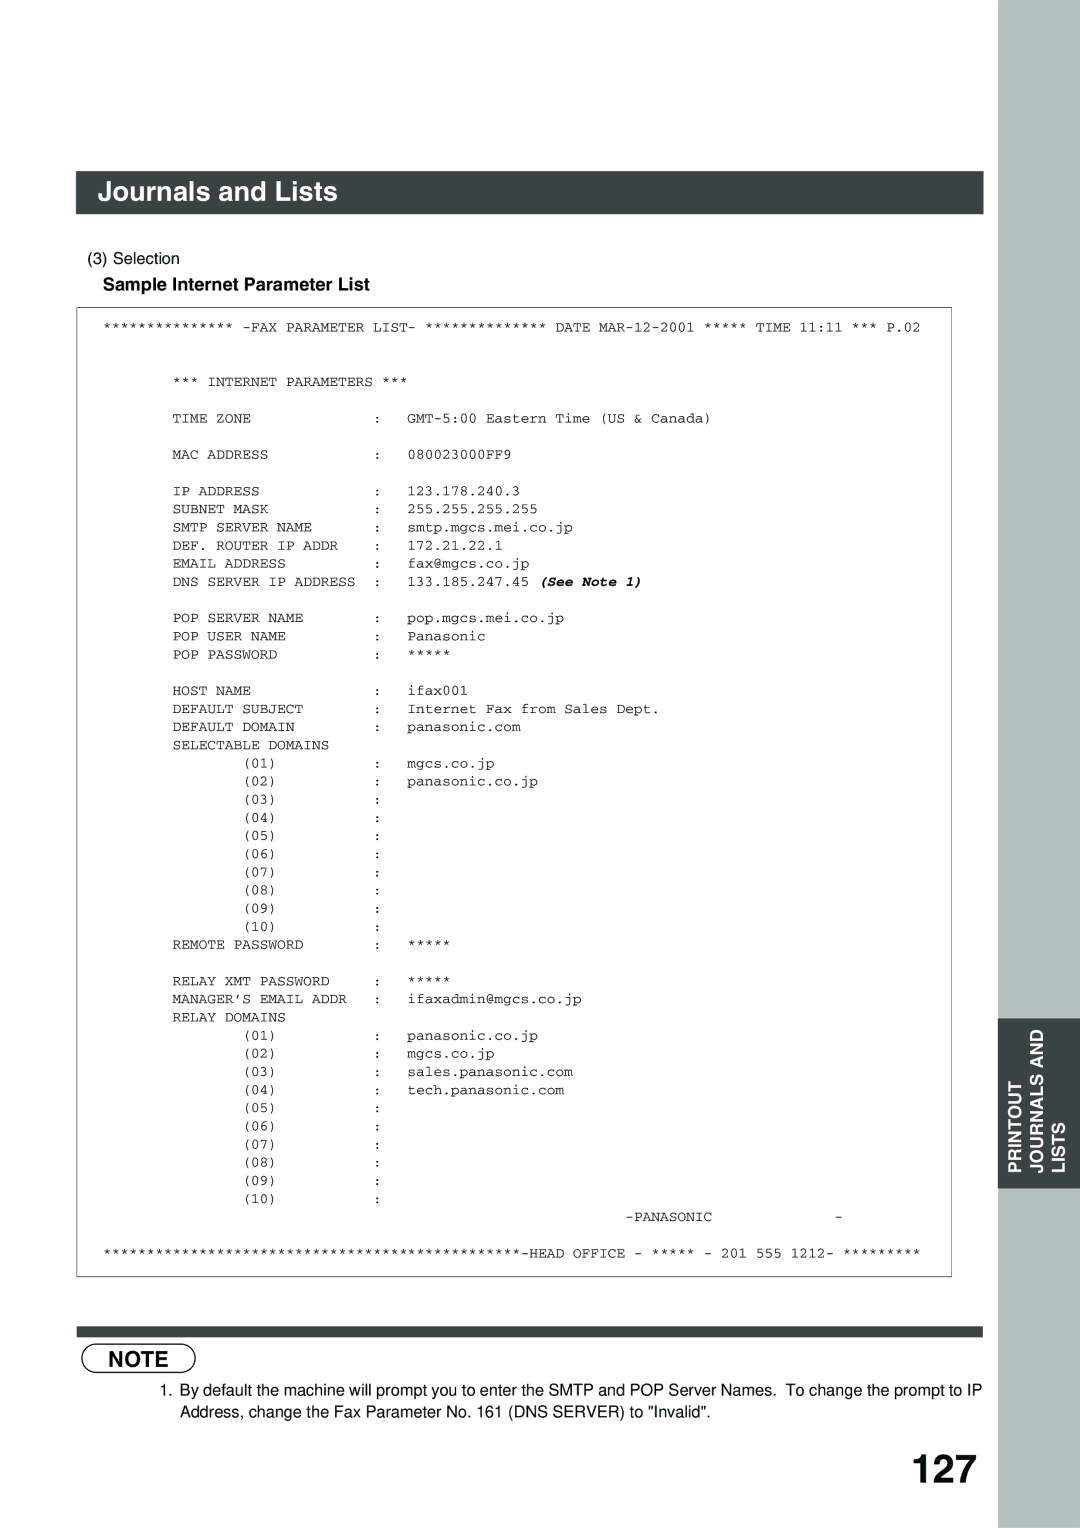 Panasonic 3000 warranty 127, Sample Internet Parameter List 